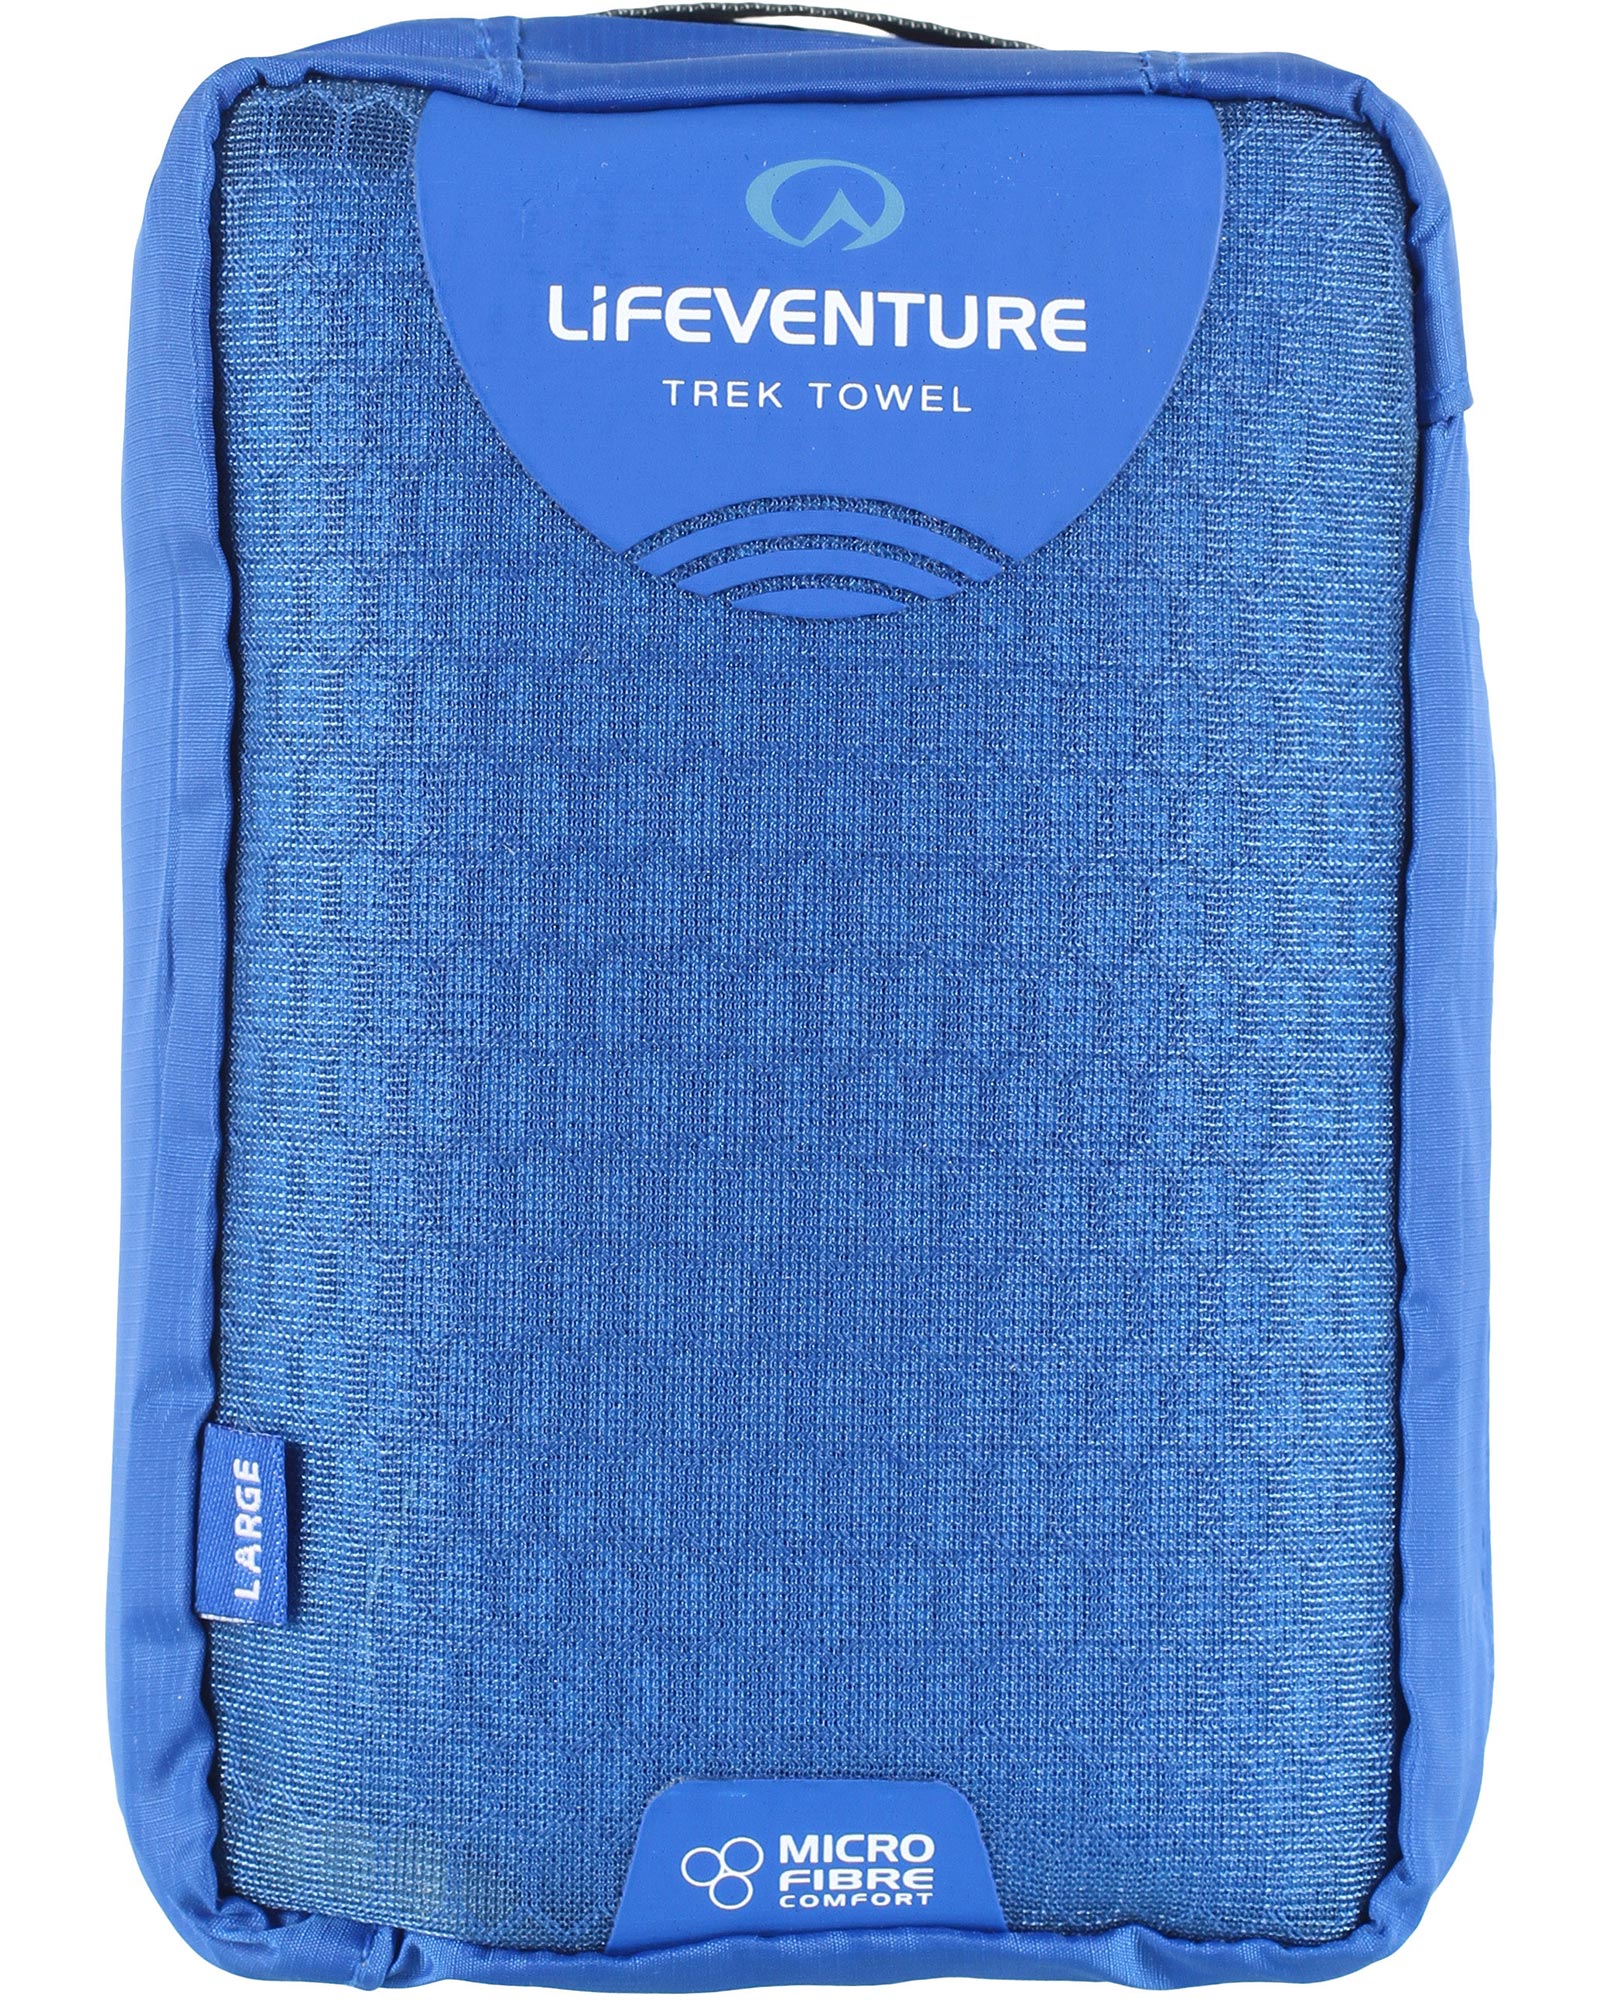 Lifeventure MicroFibre Trek Towel   Large - Blue